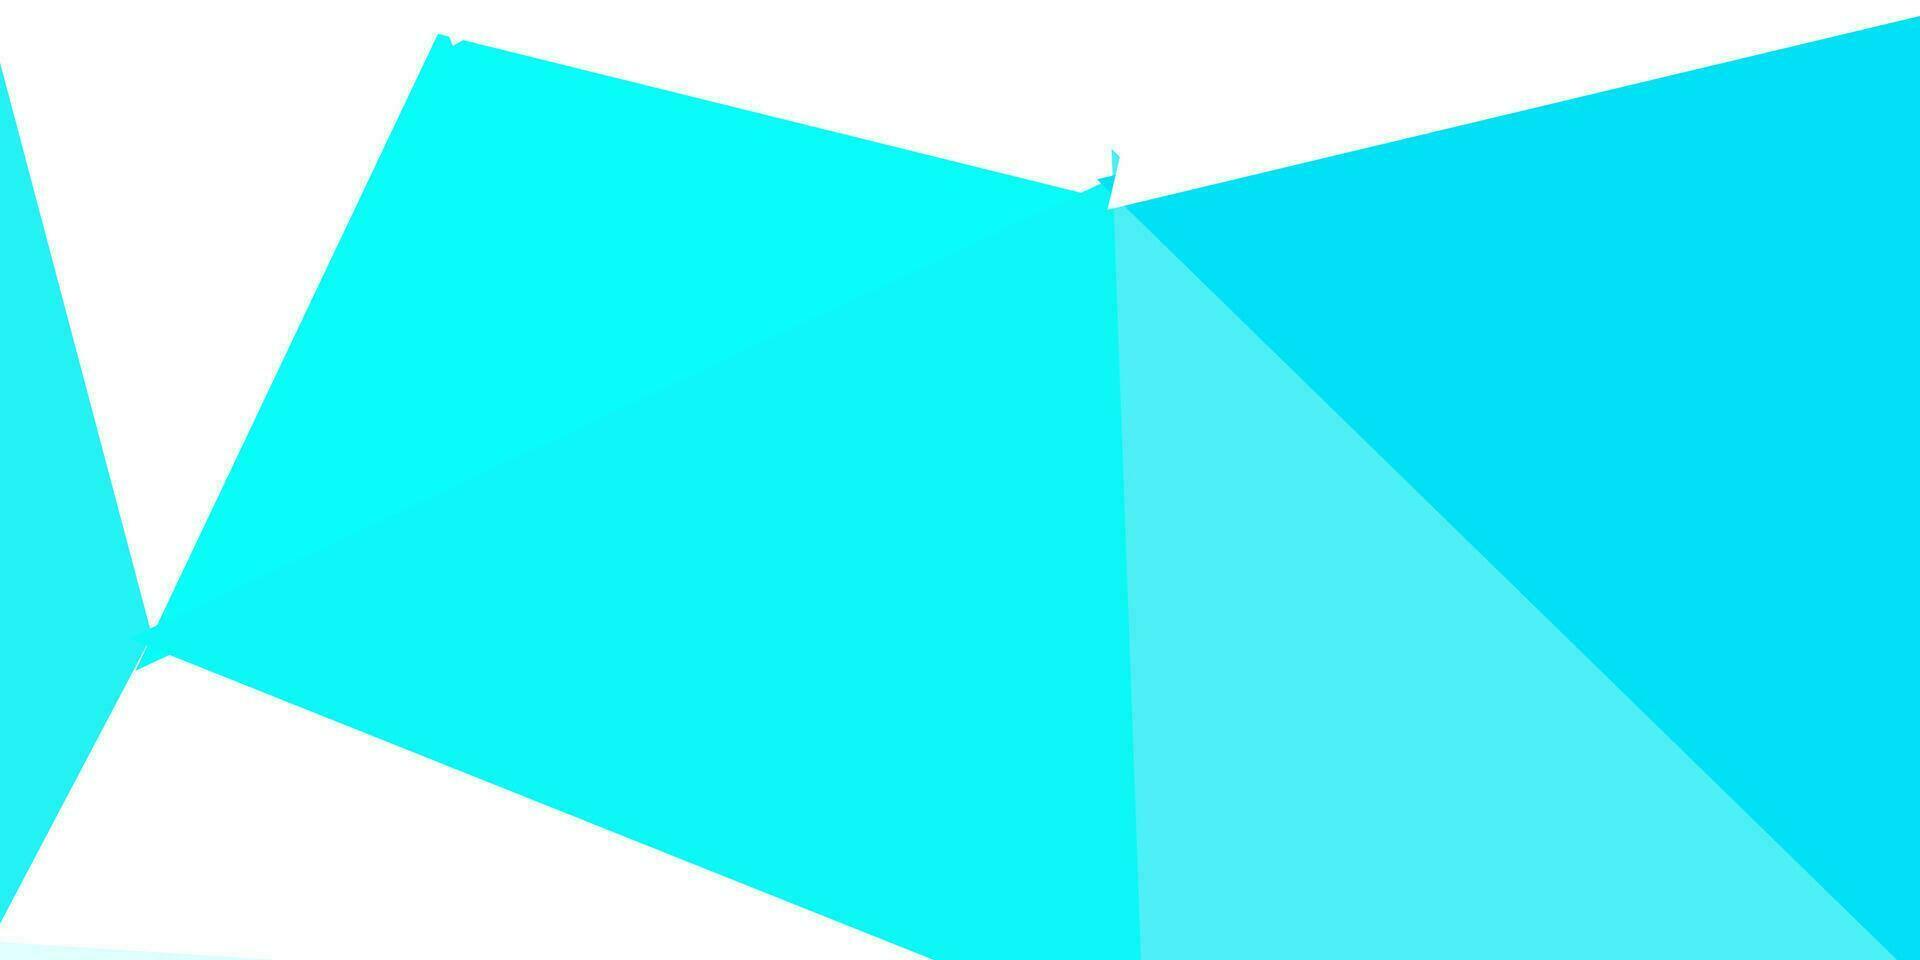 mörkblå, röd vektor poly triangel layout.